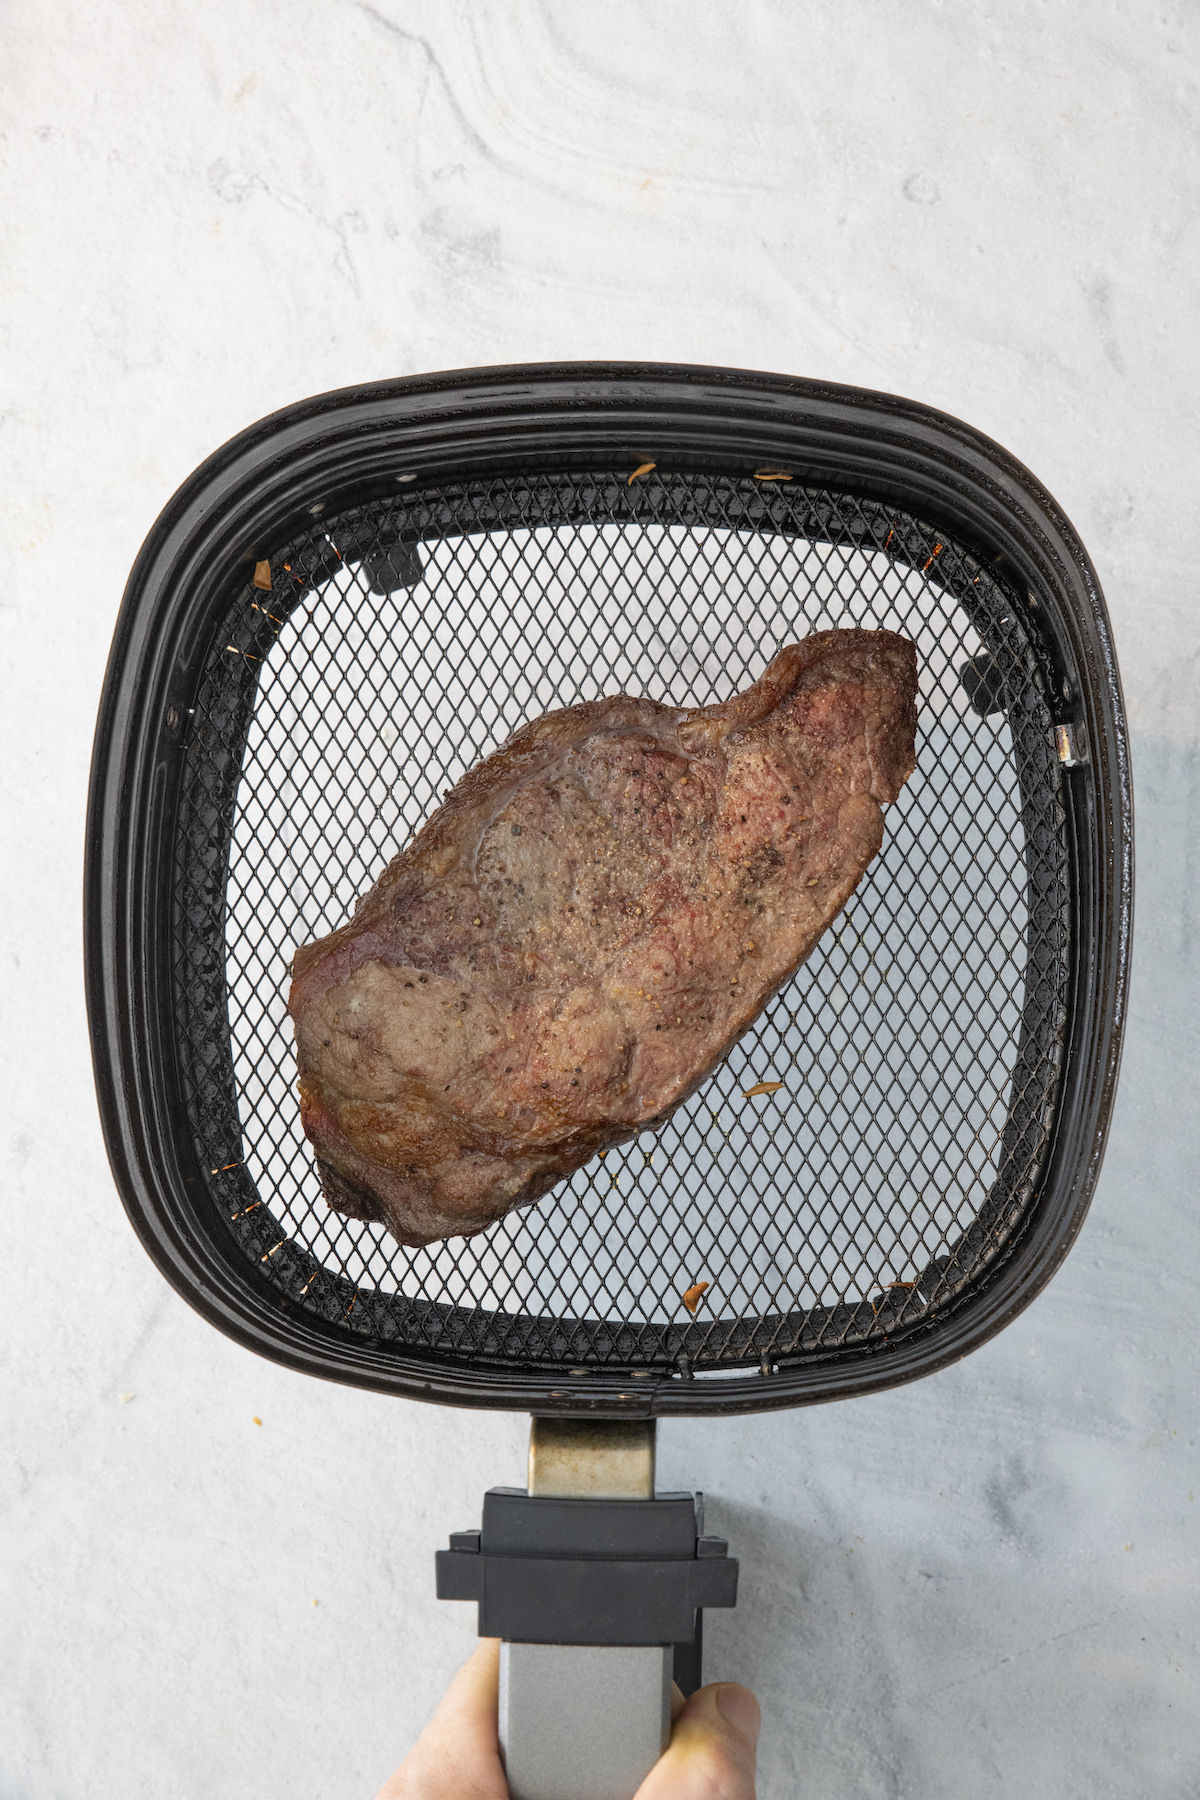 Steak in an air fryer basket.